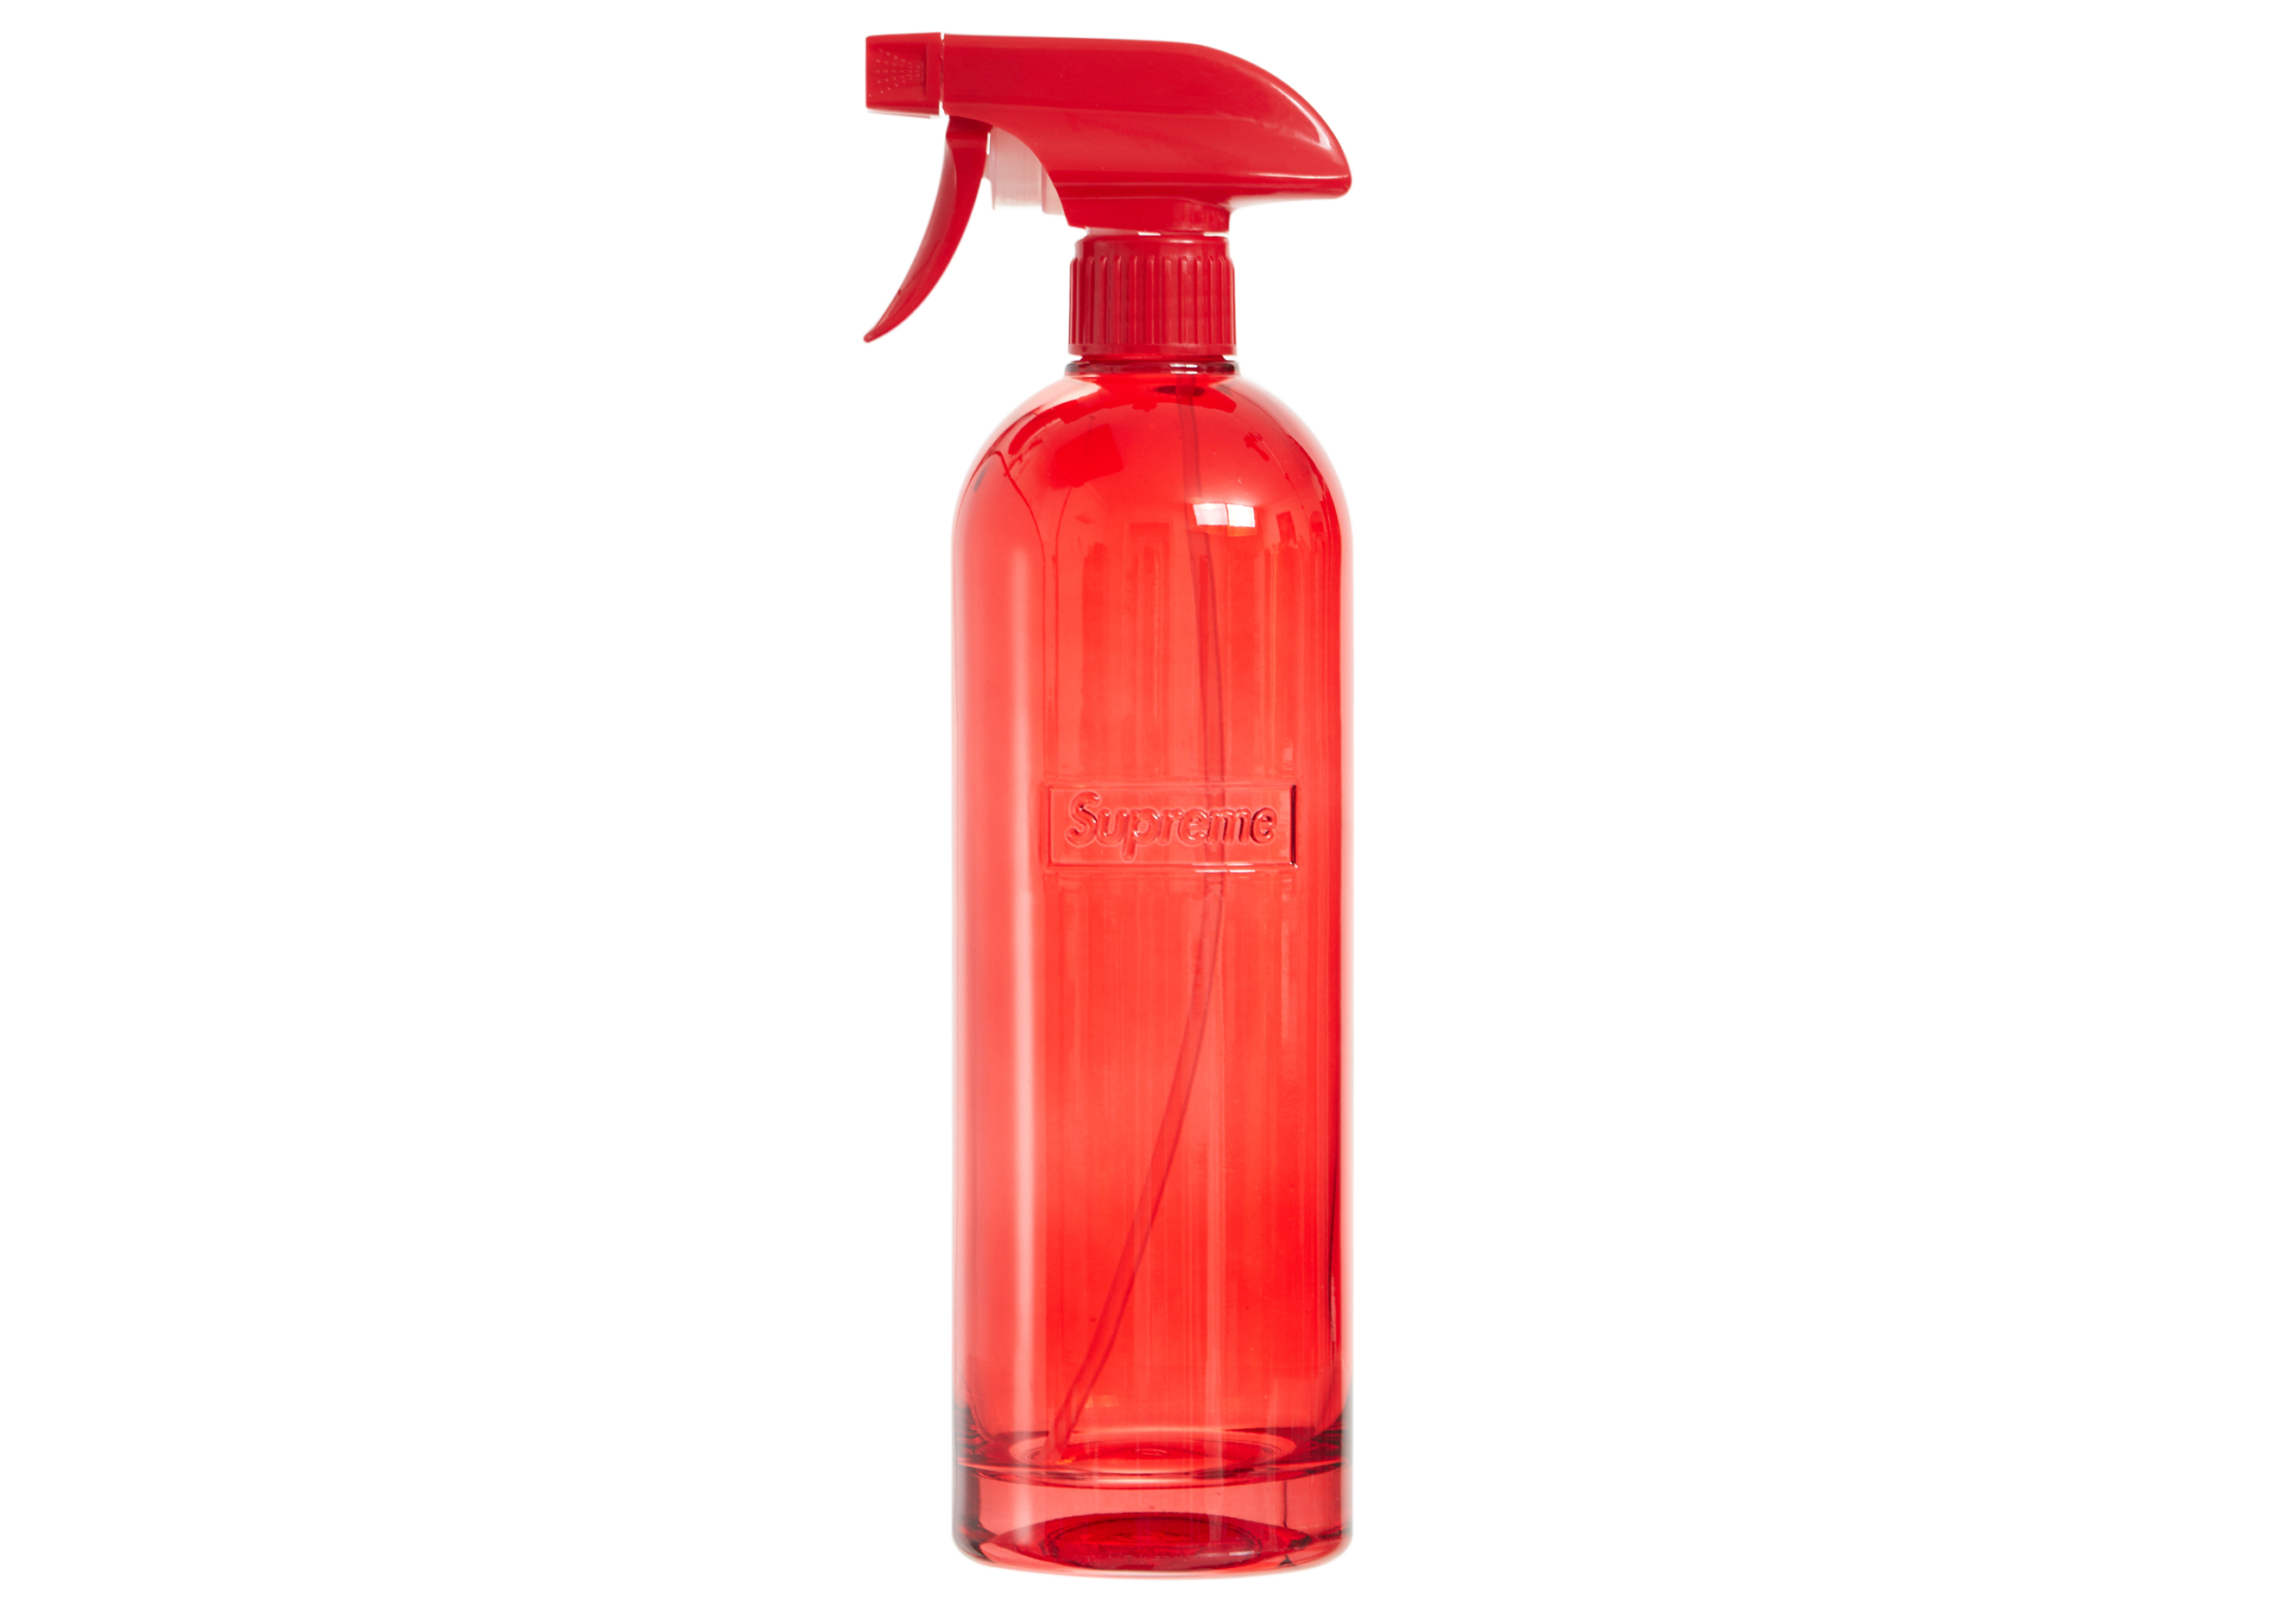 Supreme Glass Spray Bottle Red